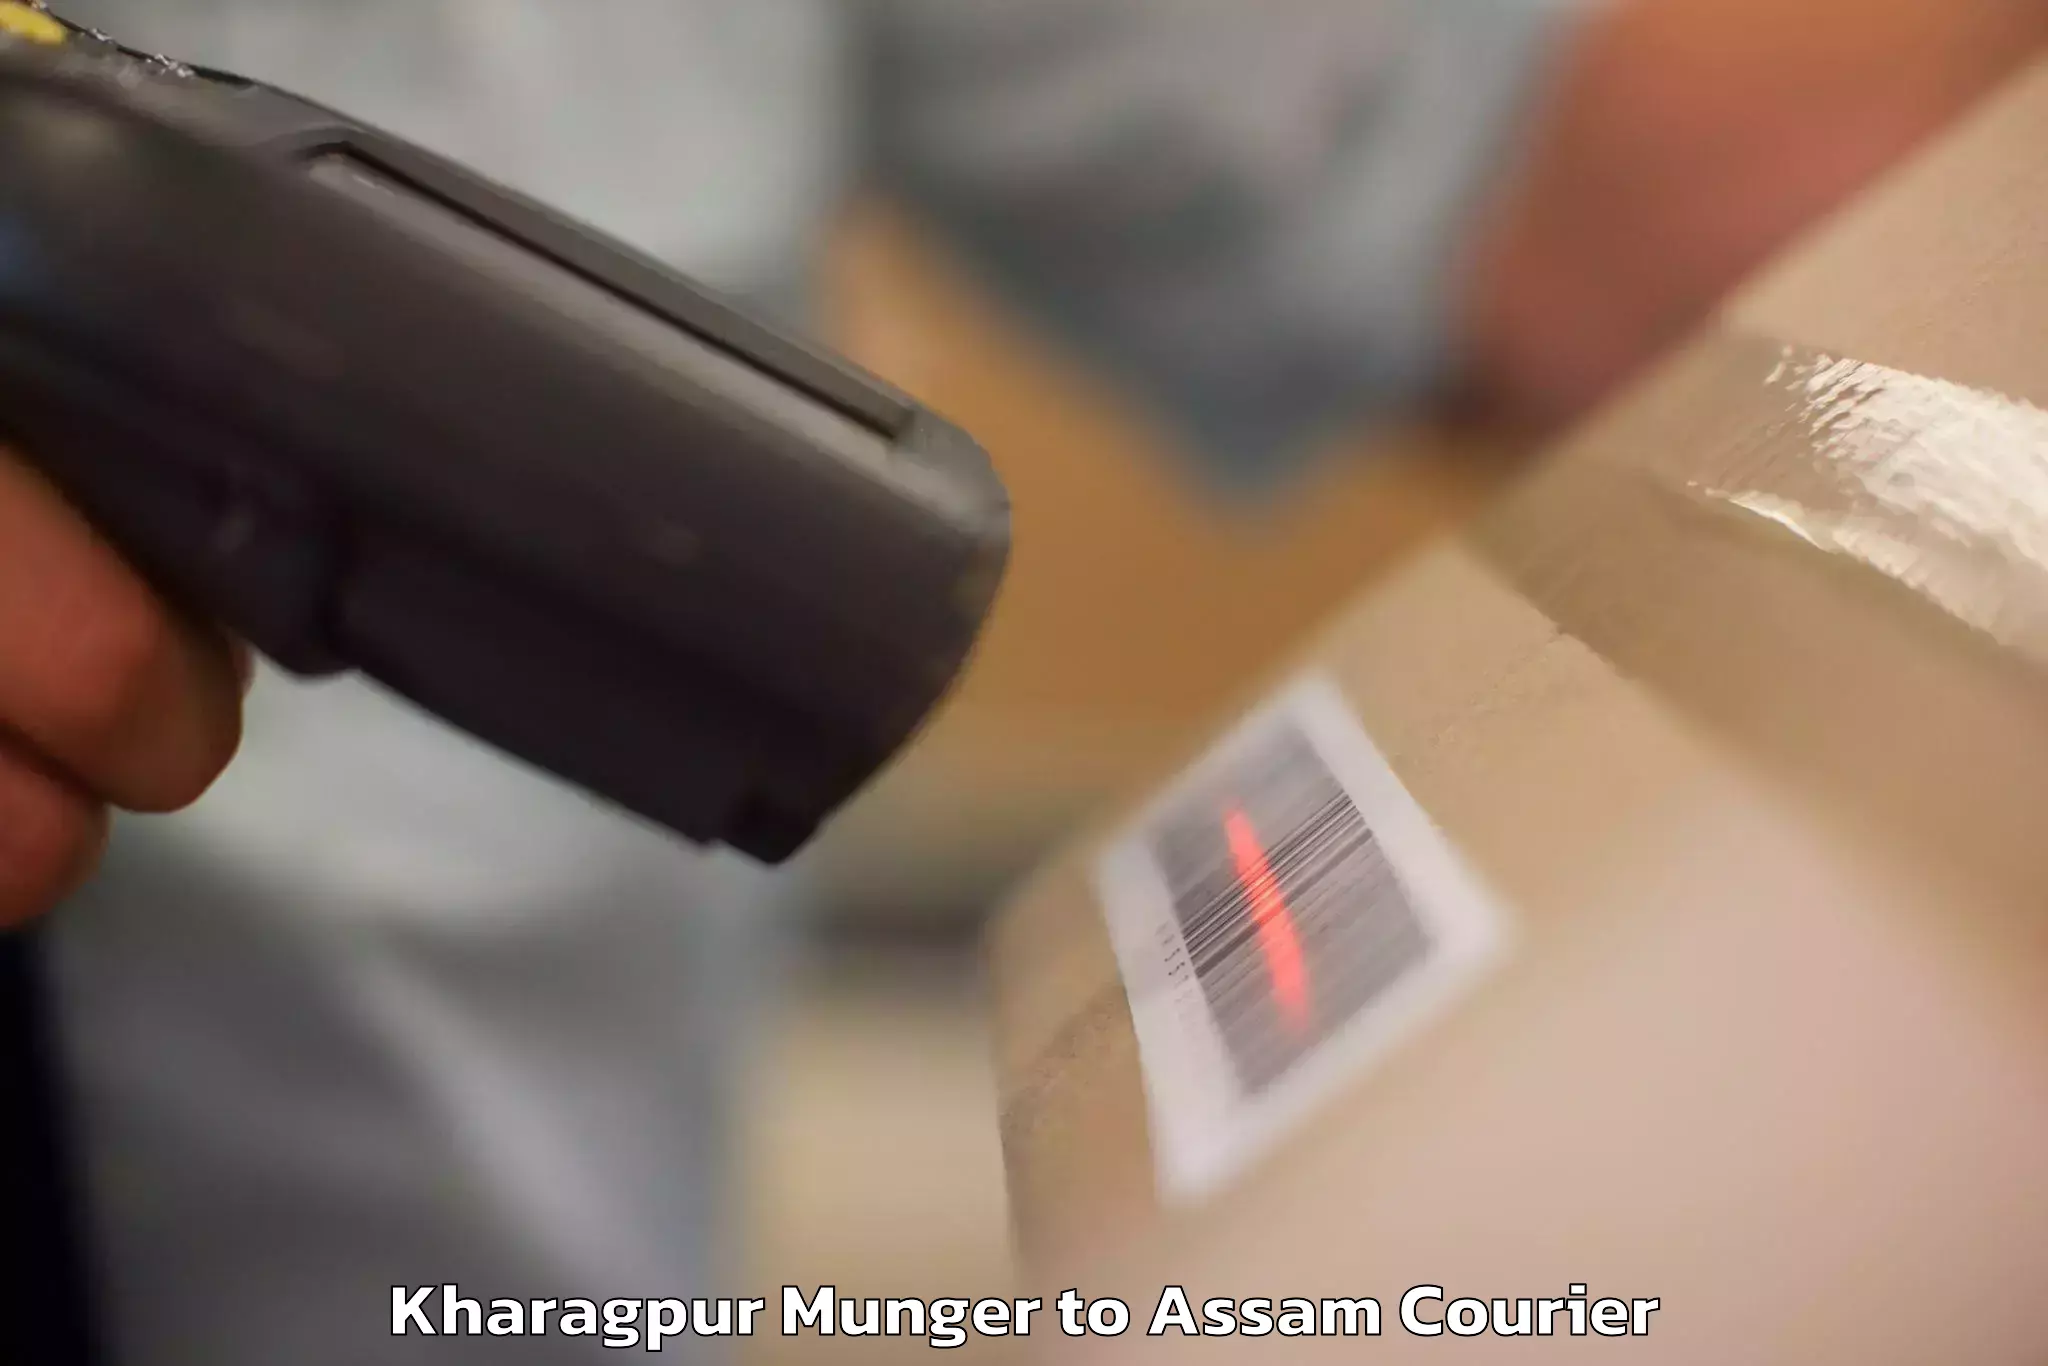 Luggage transfer service Kharagpur Munger to Assam